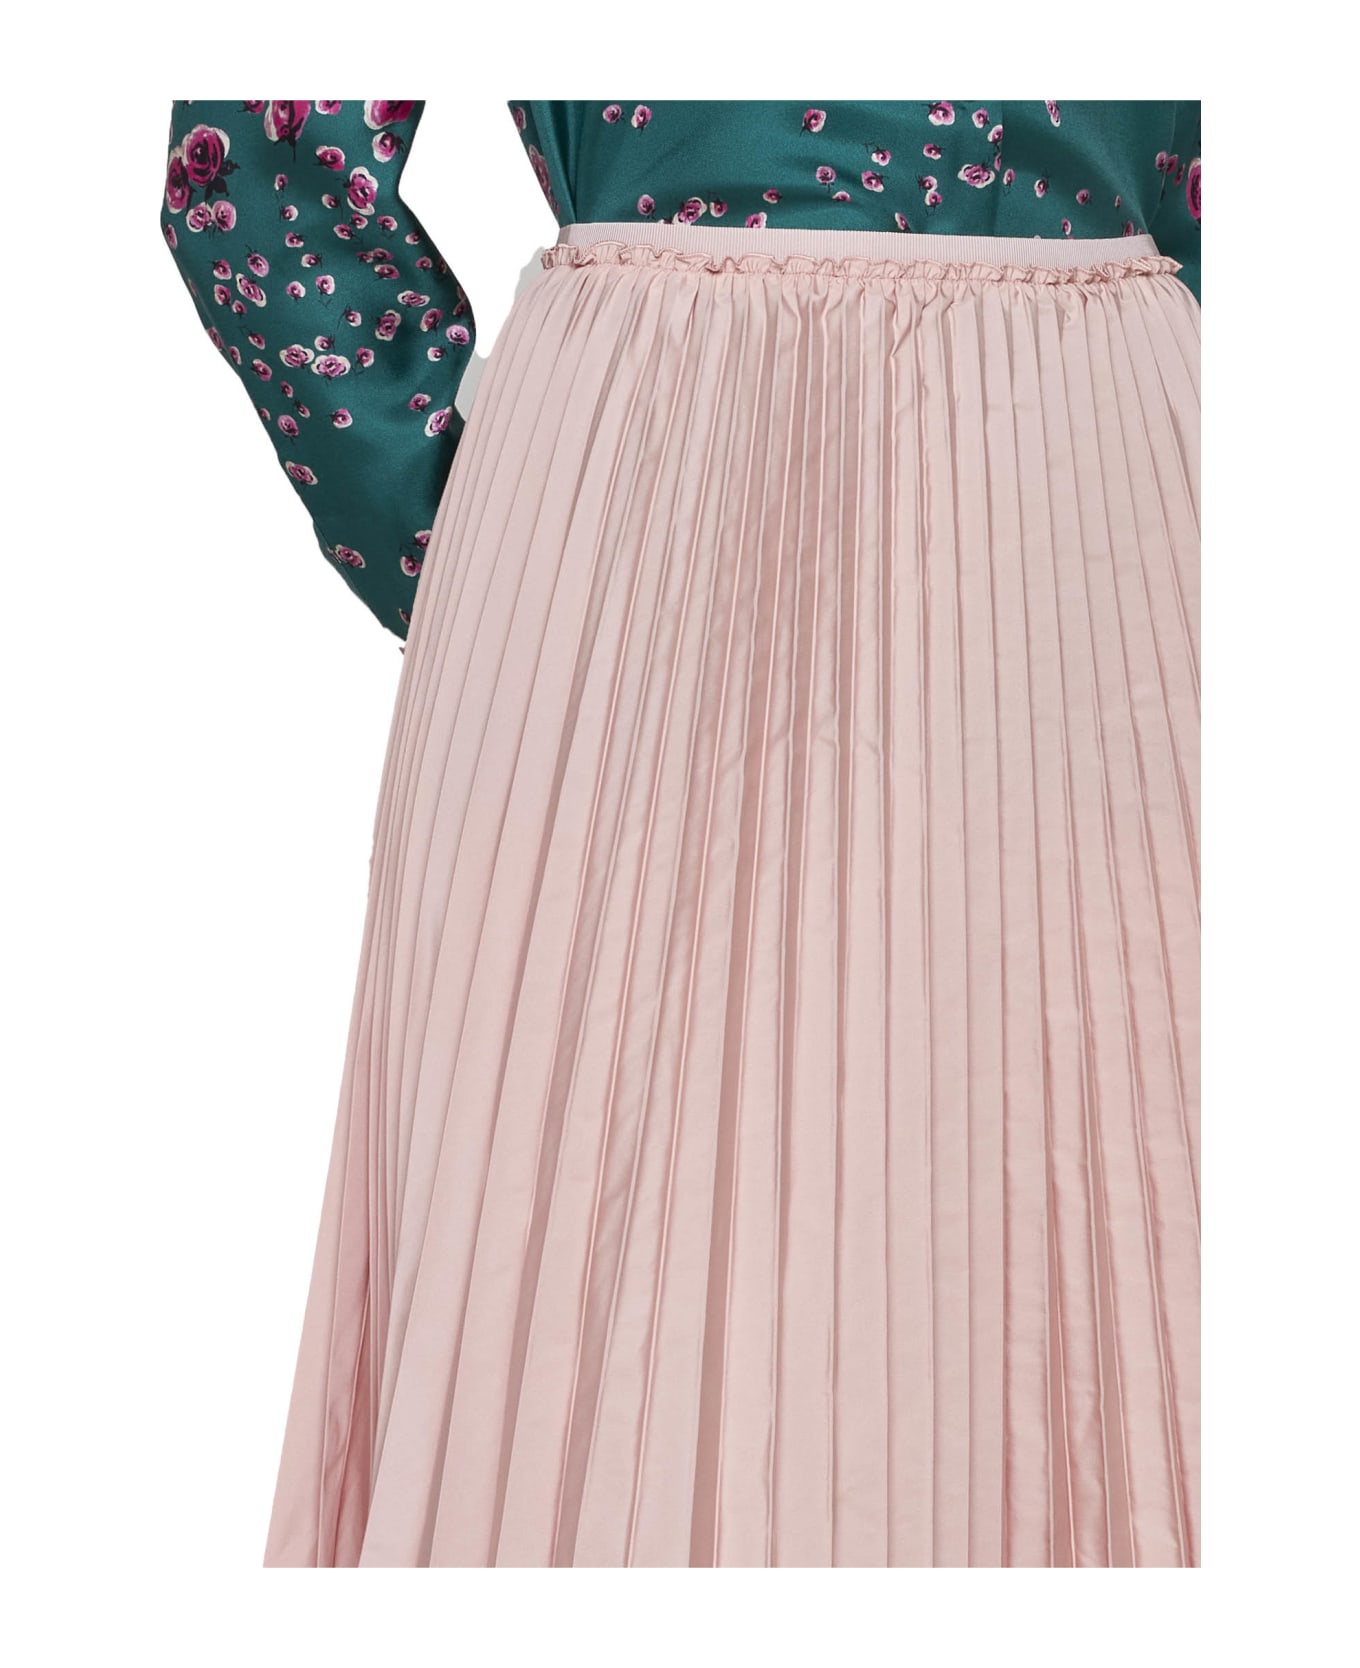 RED Valentino Skirt - New rose スカート